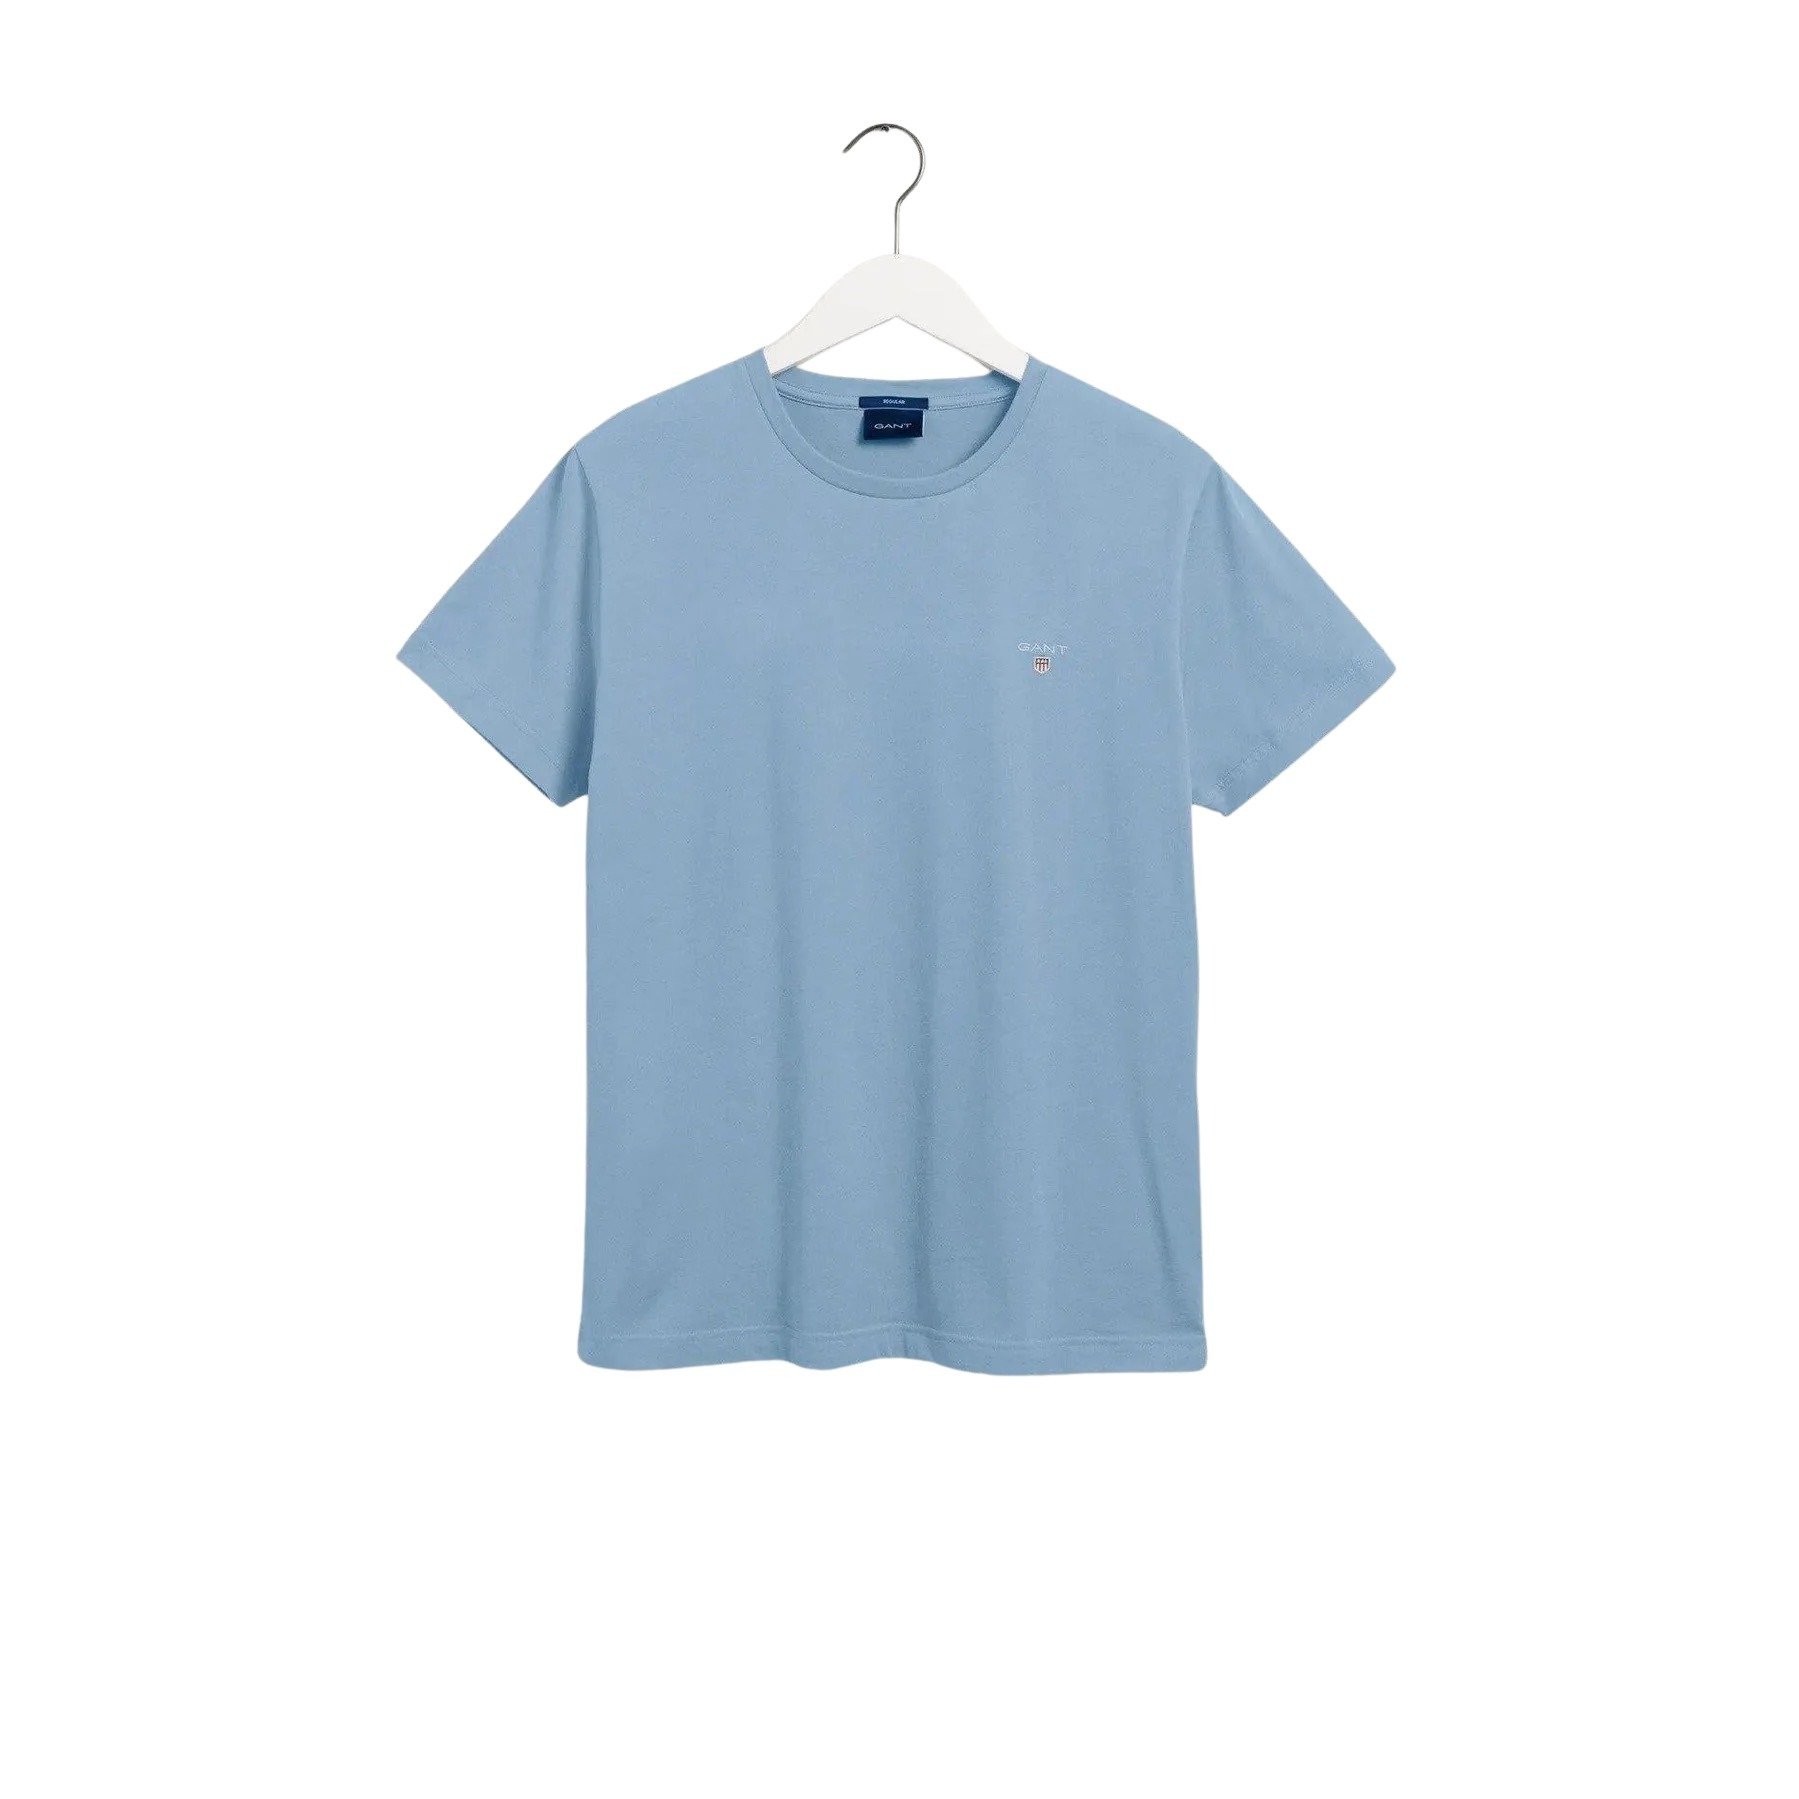 orginal-t-skjorte-herre-capri-blue-944016_1799x1799